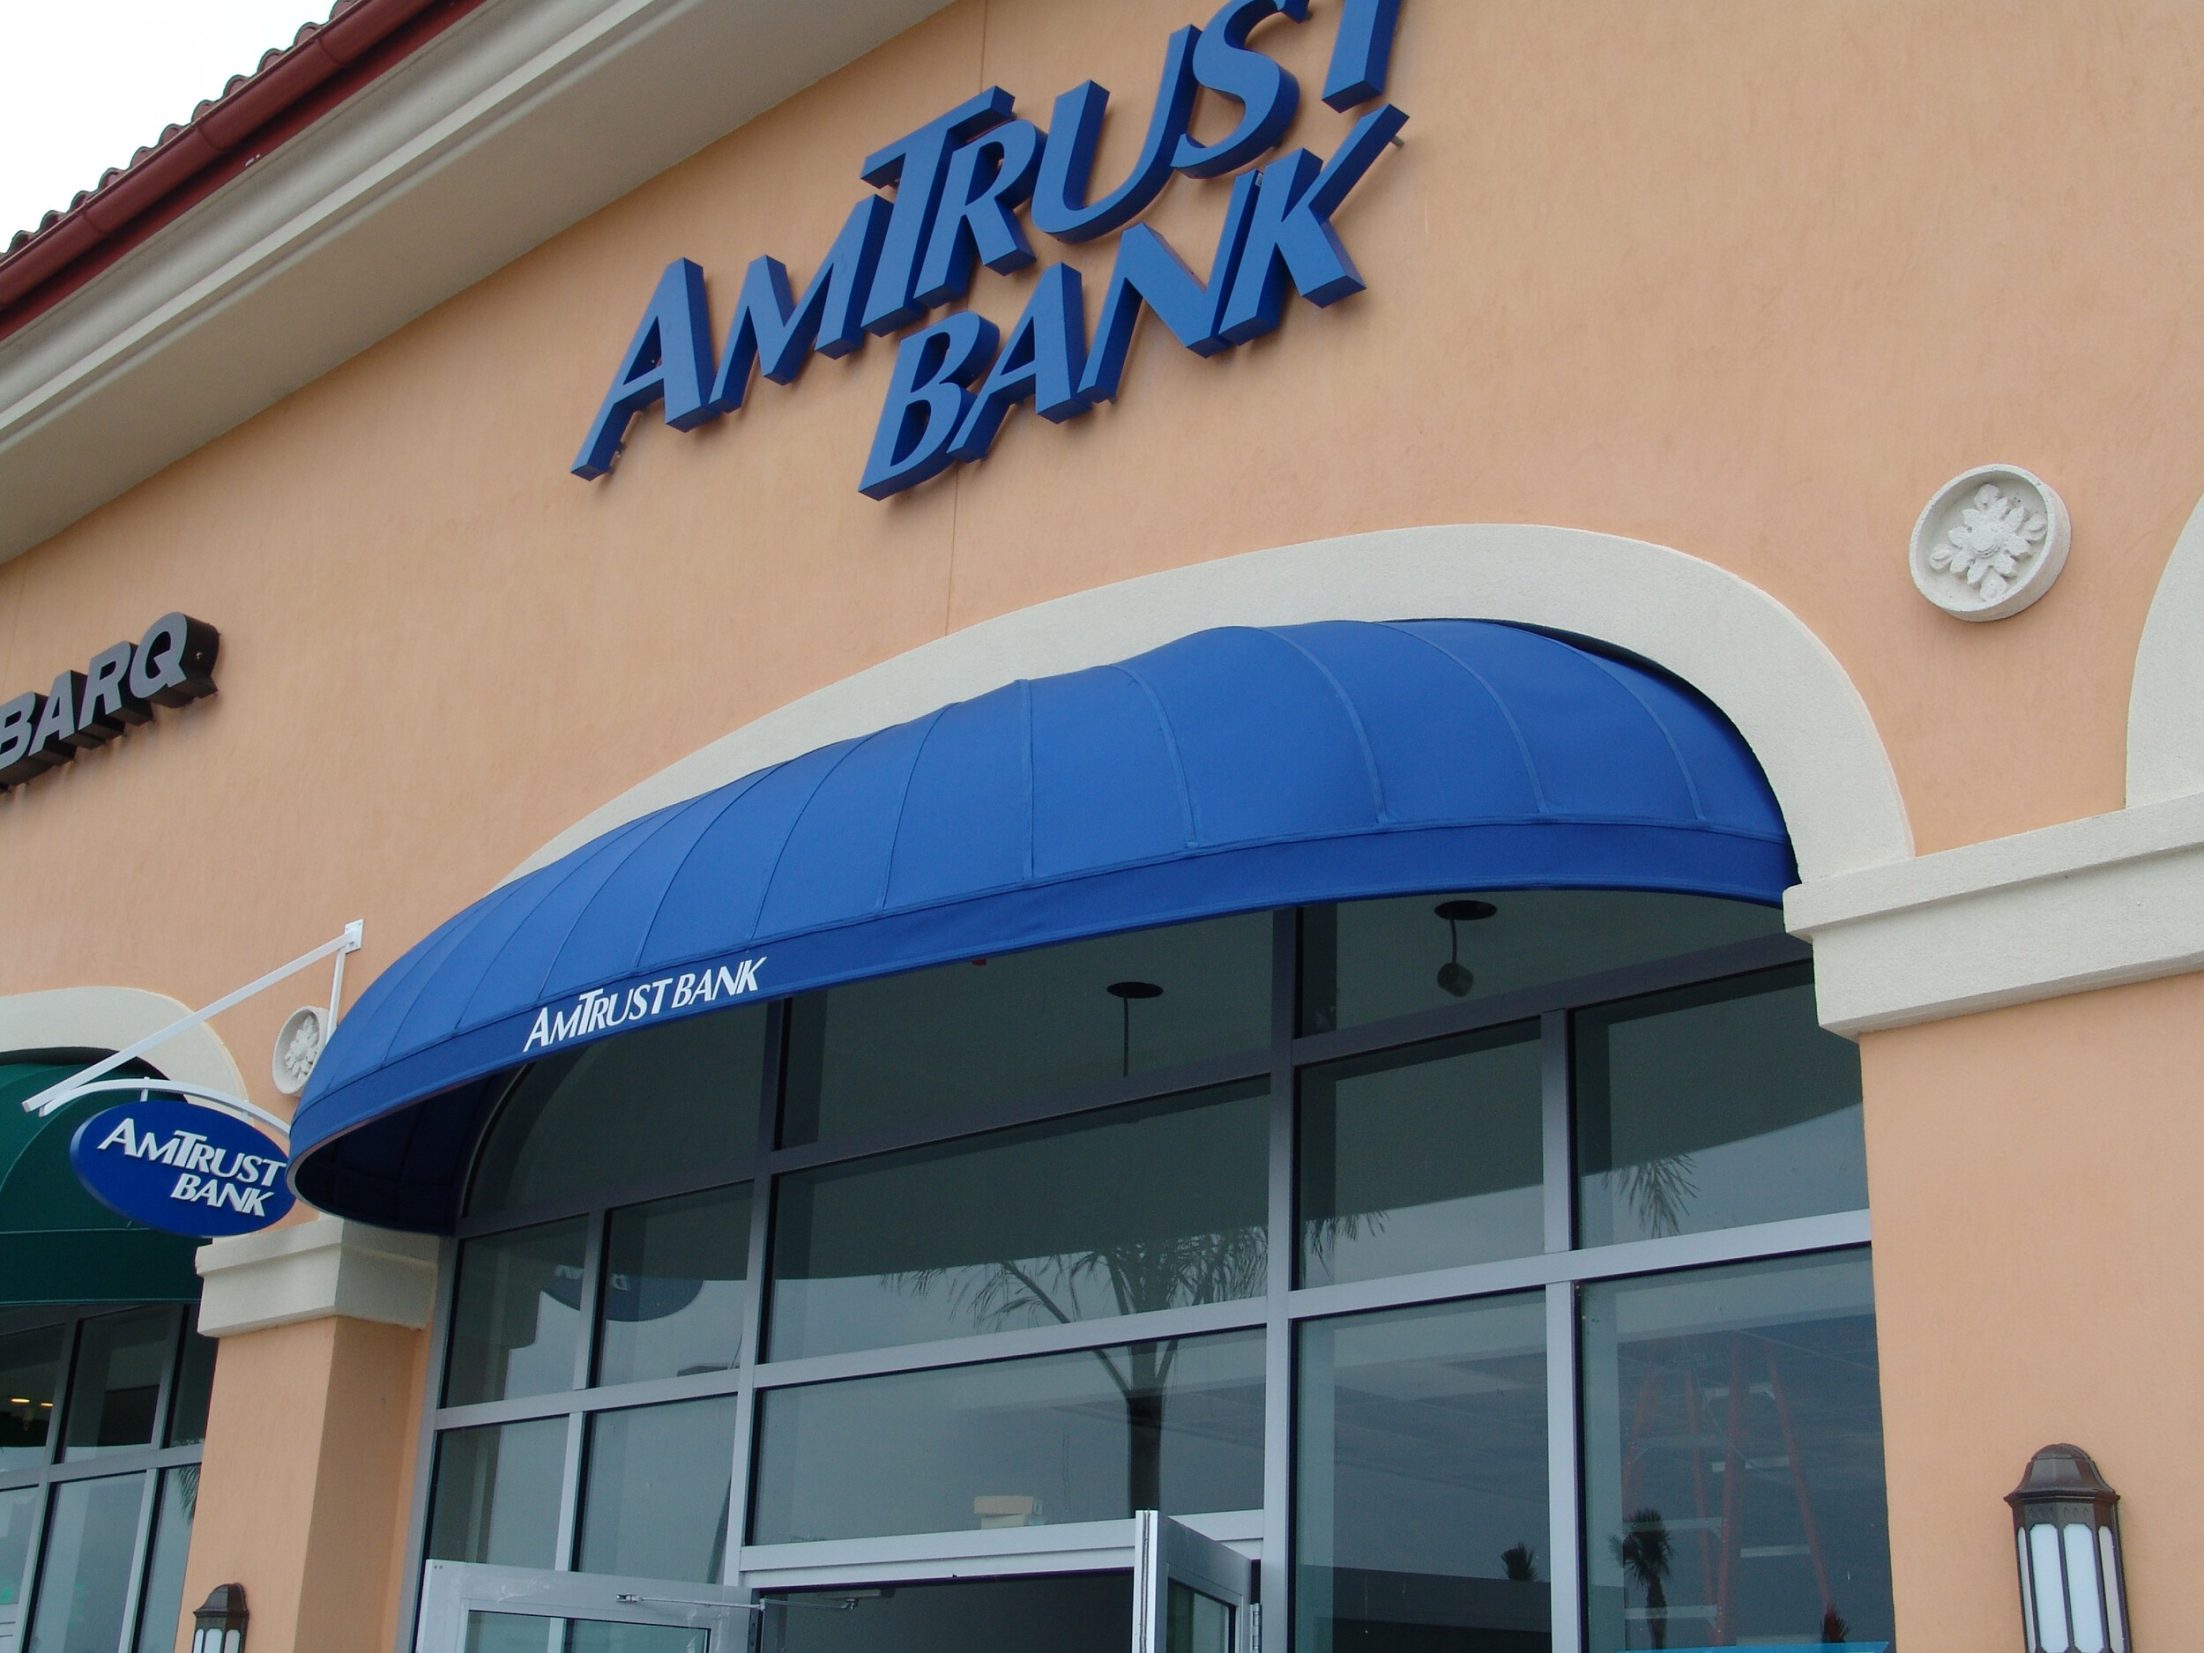 amtrust bank awnings